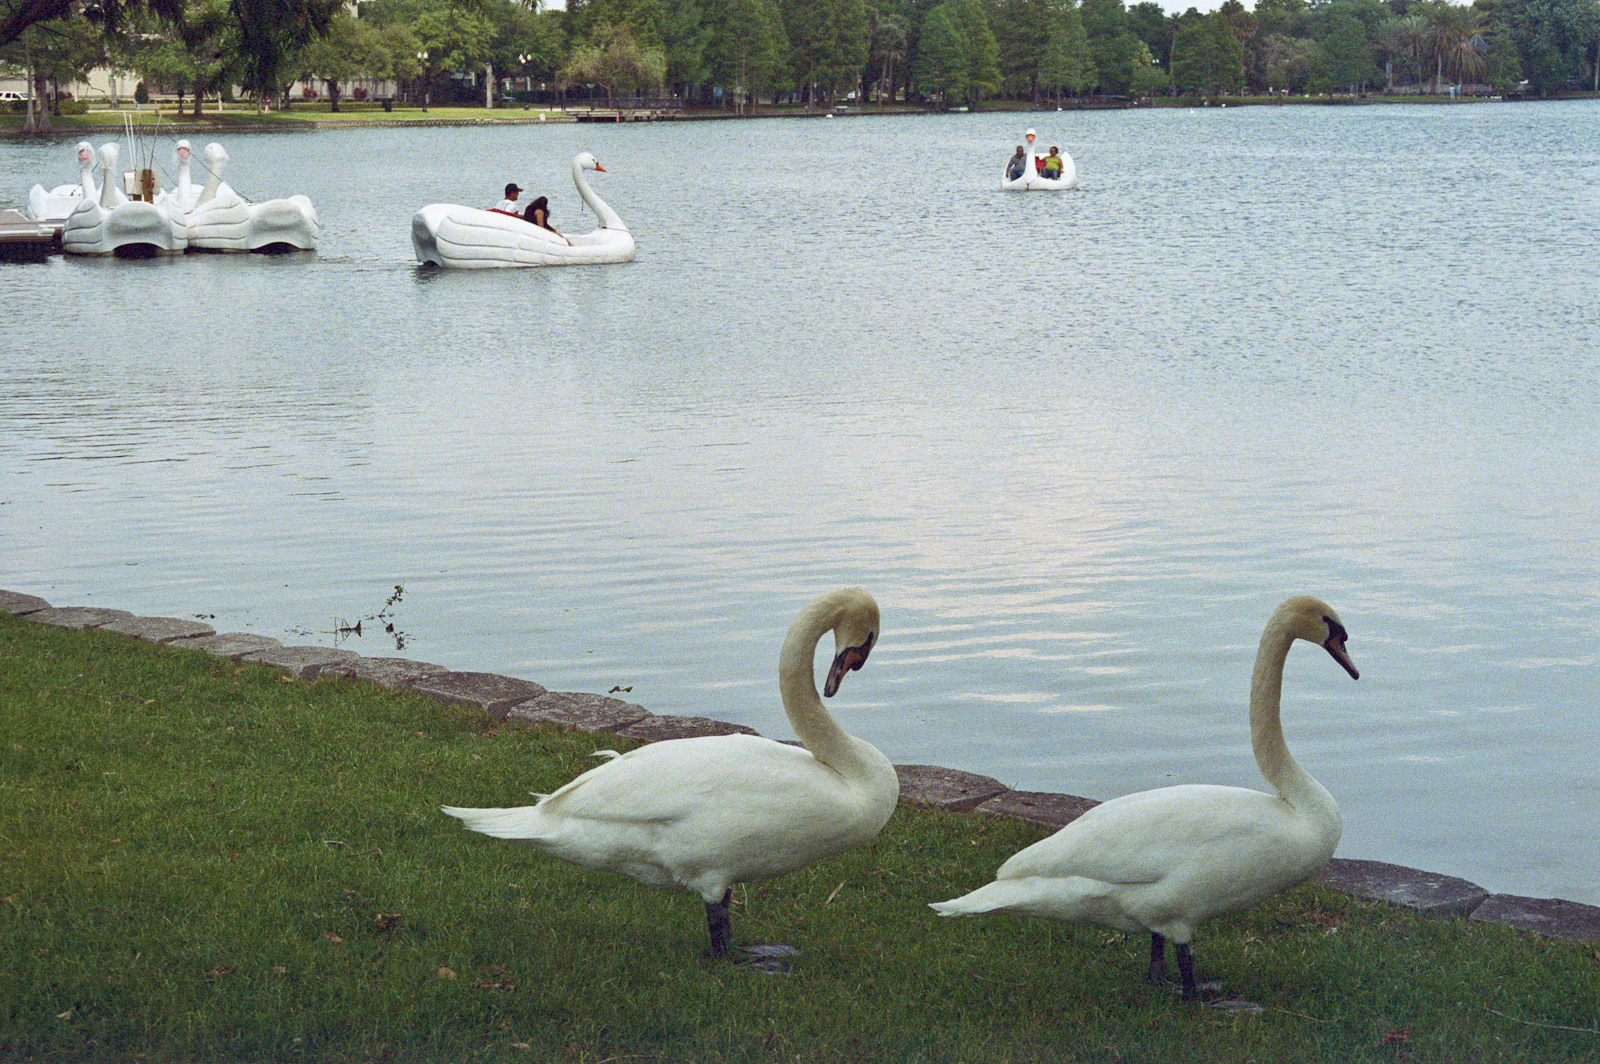 Swans ignoring the swans